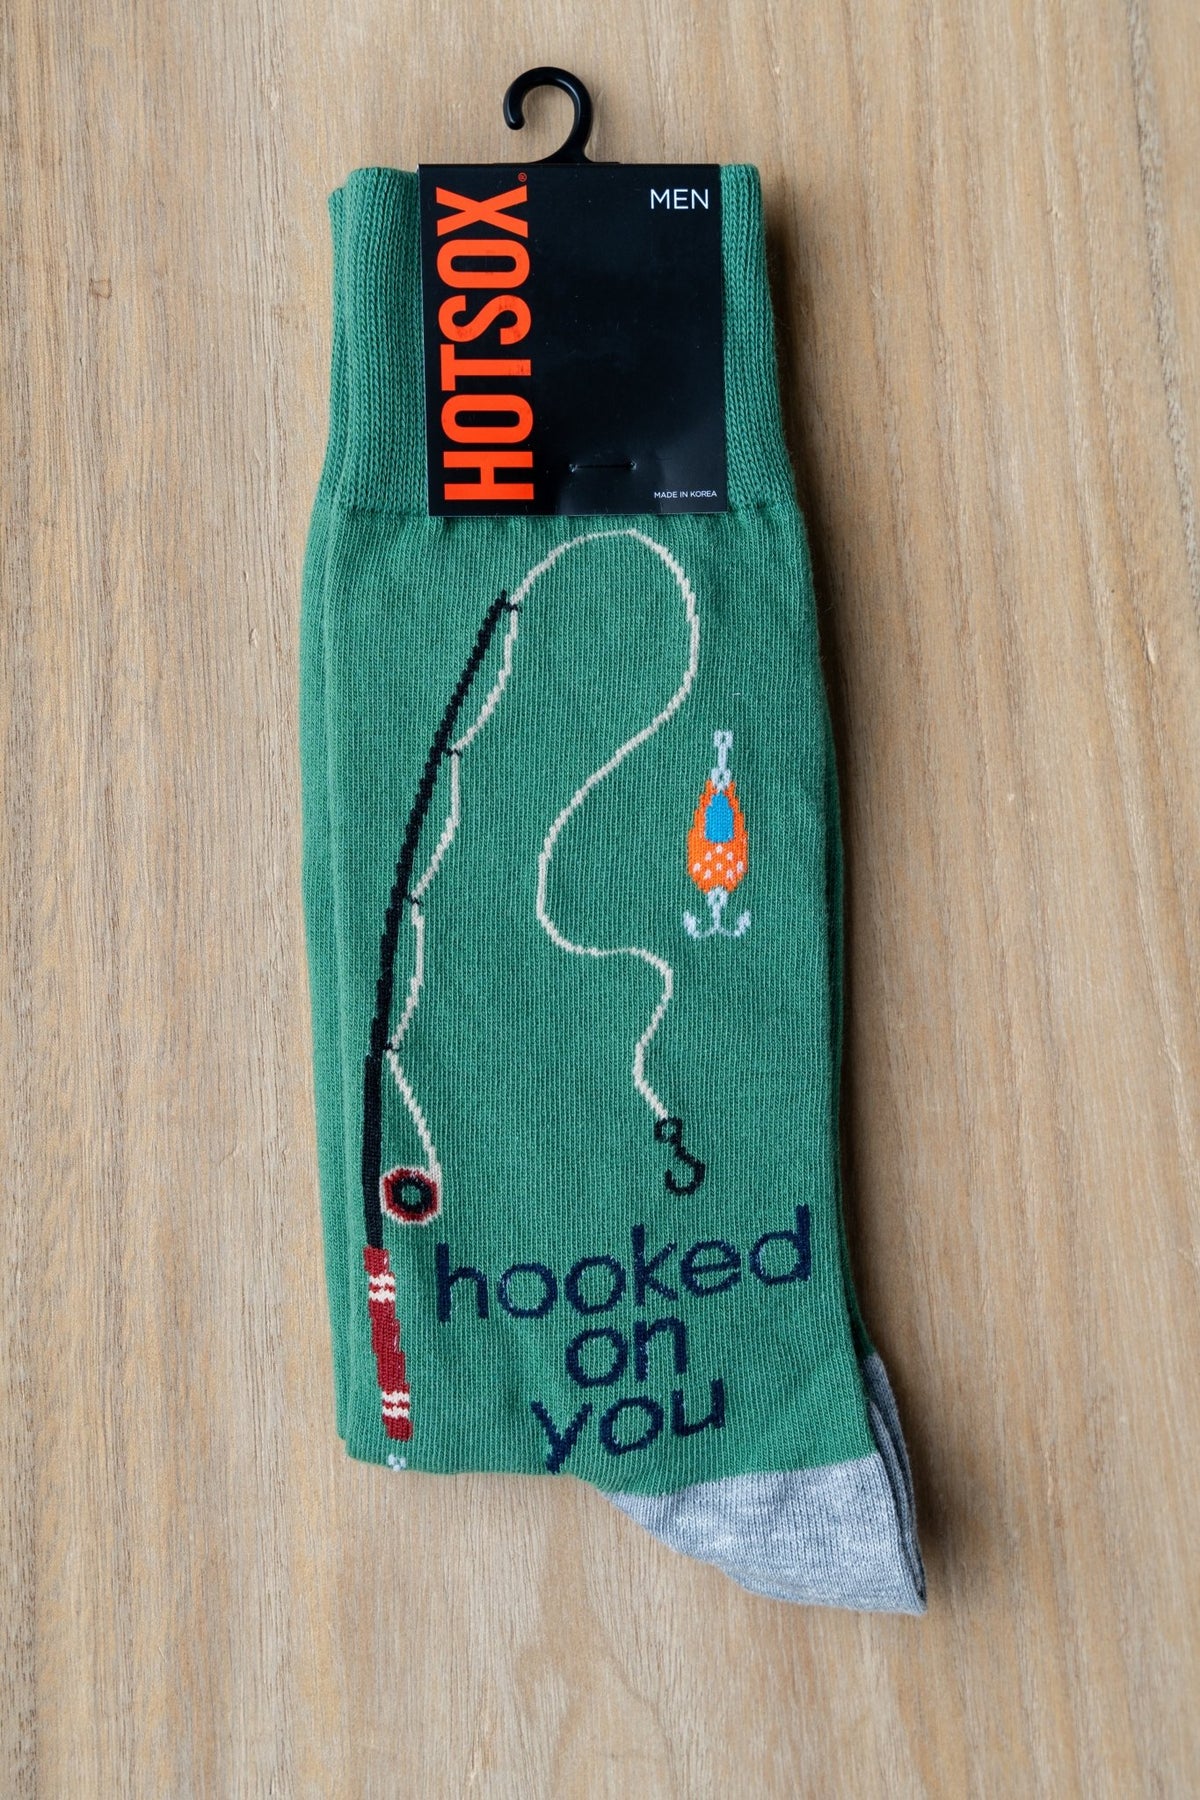 HotSox hooked on you fishing socks olive - Trendy Socks at Lush Fashion Lounge Boutique in Oklahoma City